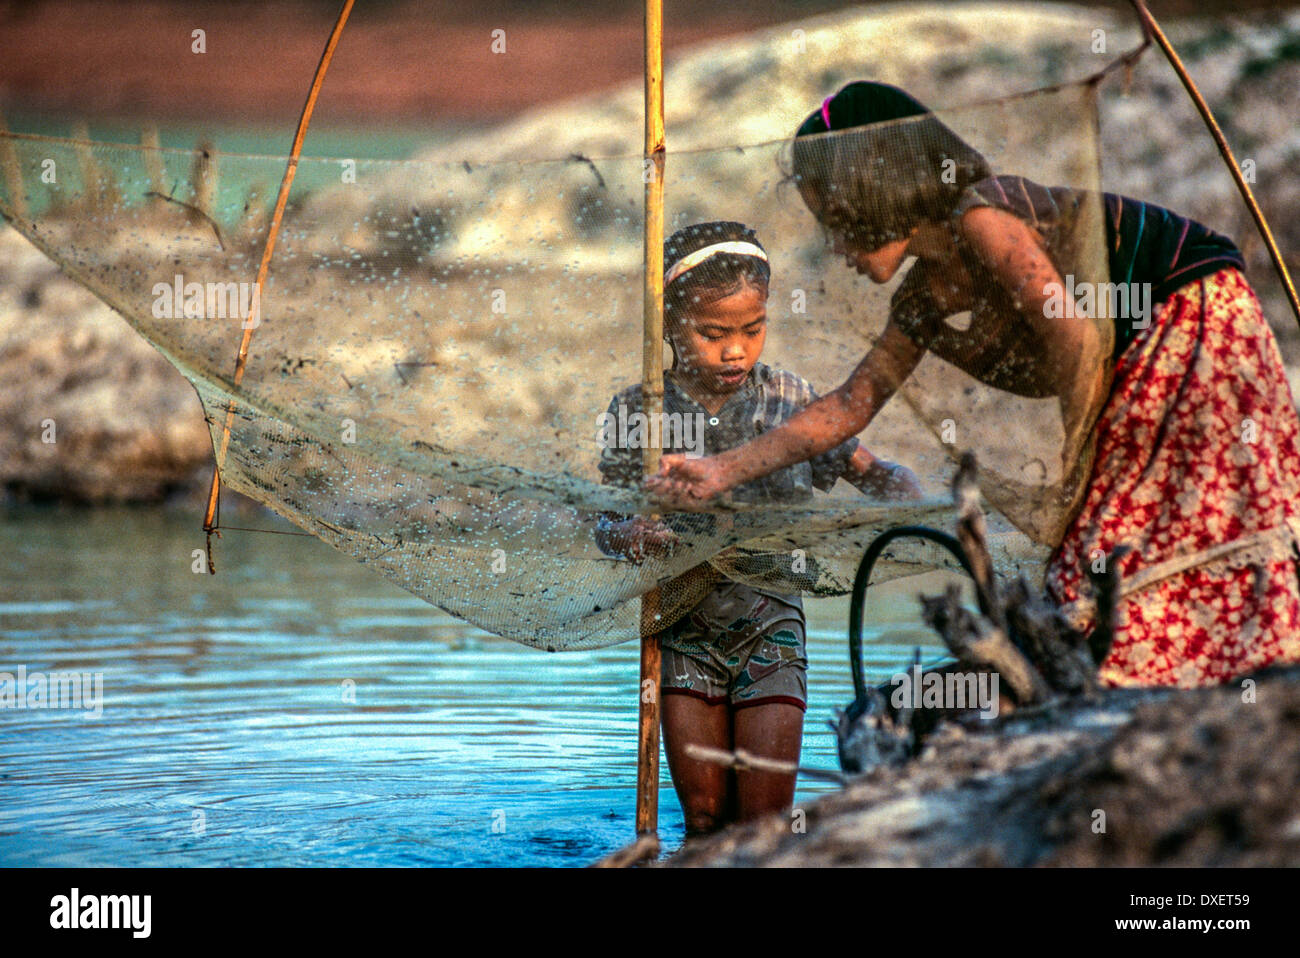 https://c8.alamy.com/comp/DXET59/laos-children-mending-fishing-net-bamboo-poles-riverbank-trees-sunshine-DXET59.jpg